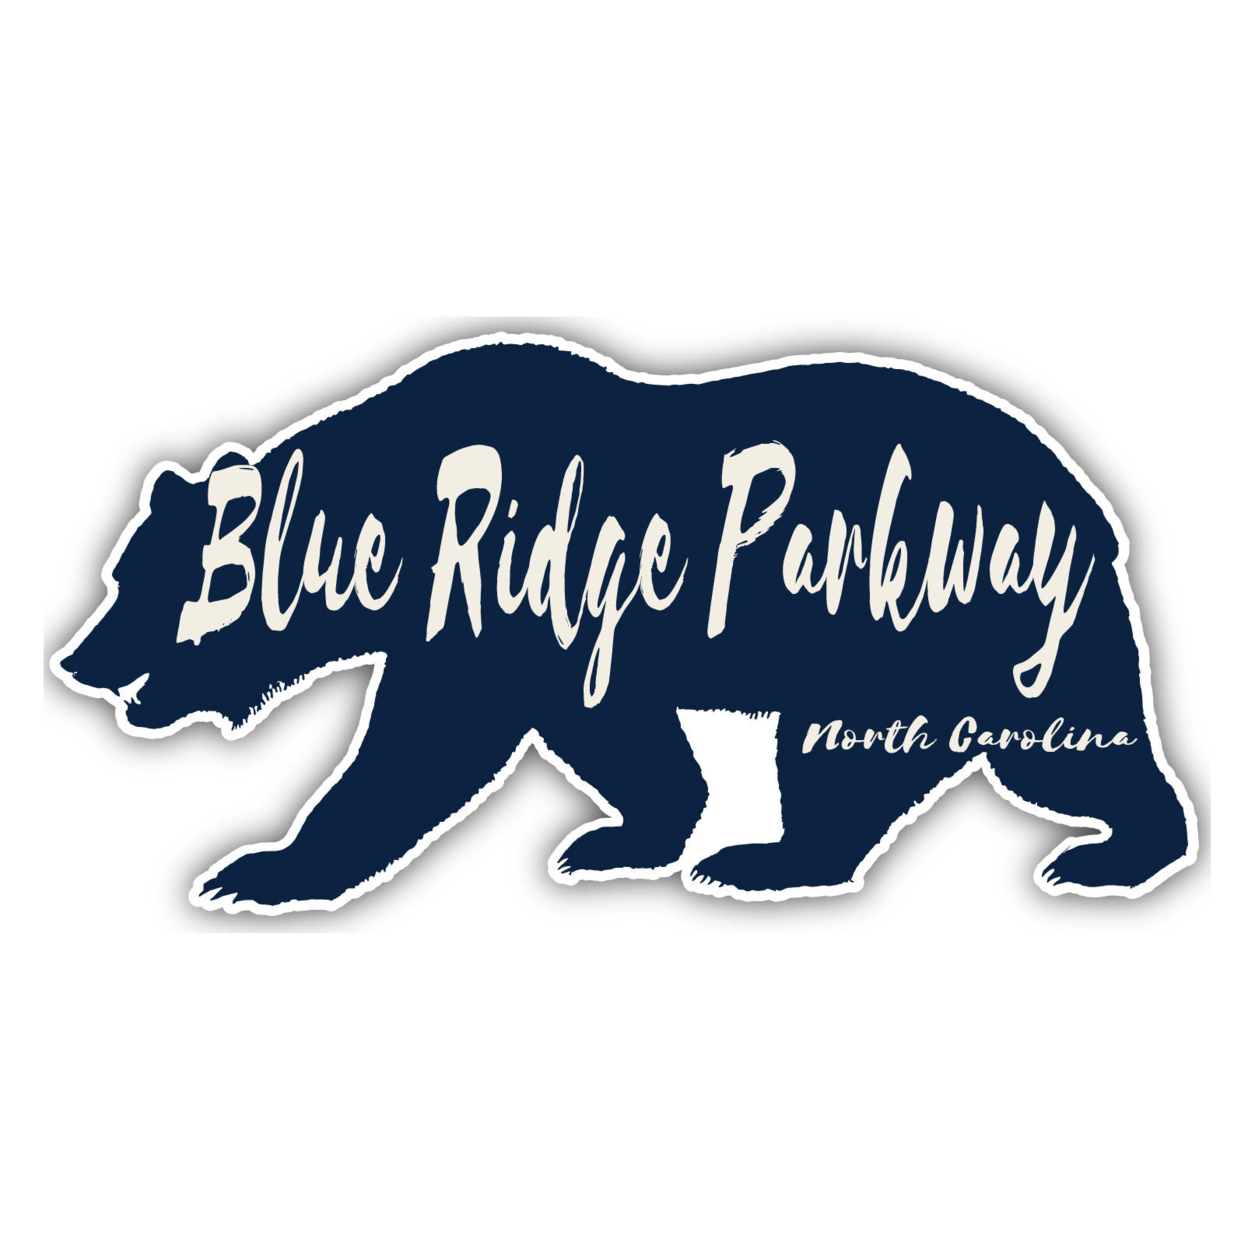 Blue Ridge Parkway North Carolina Souvenir Decorative Stickers (Choose Theme And Size) - 4-Pack, 10-Inch, Bear